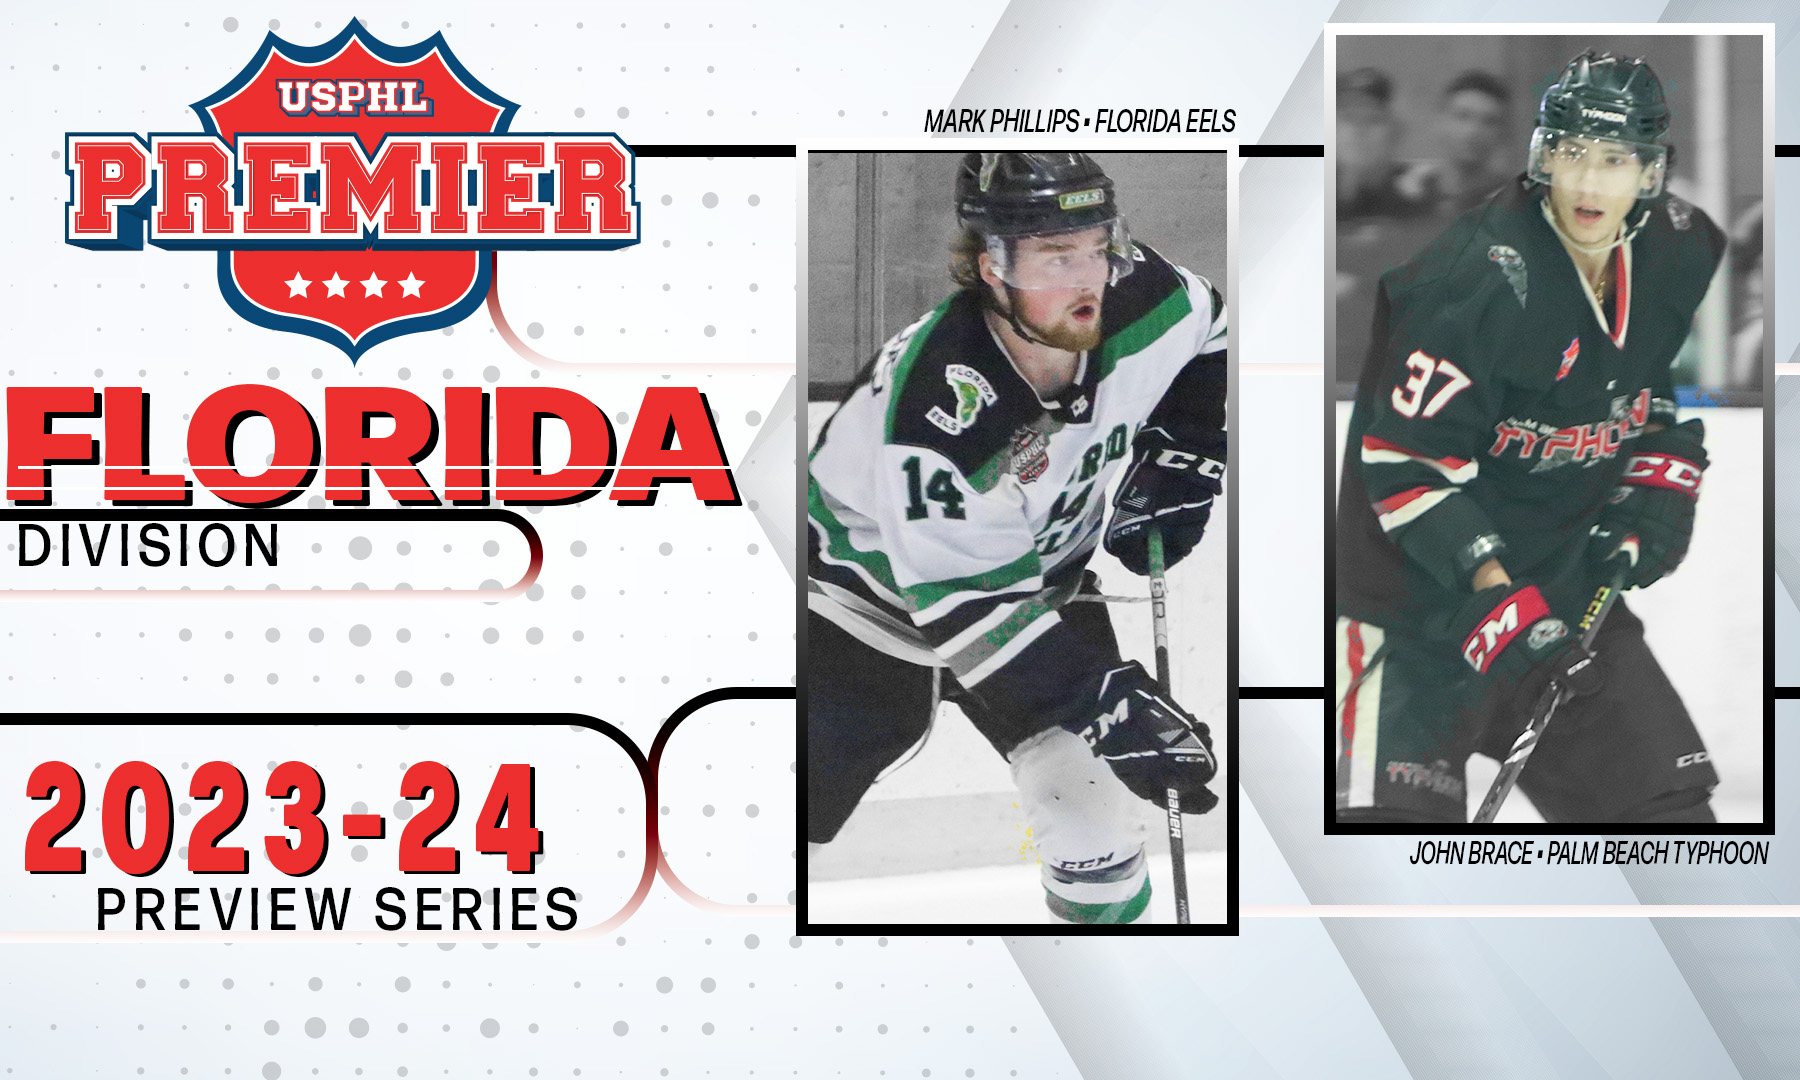 USPHL Premier 2023-24 Division Preview Series: Florida